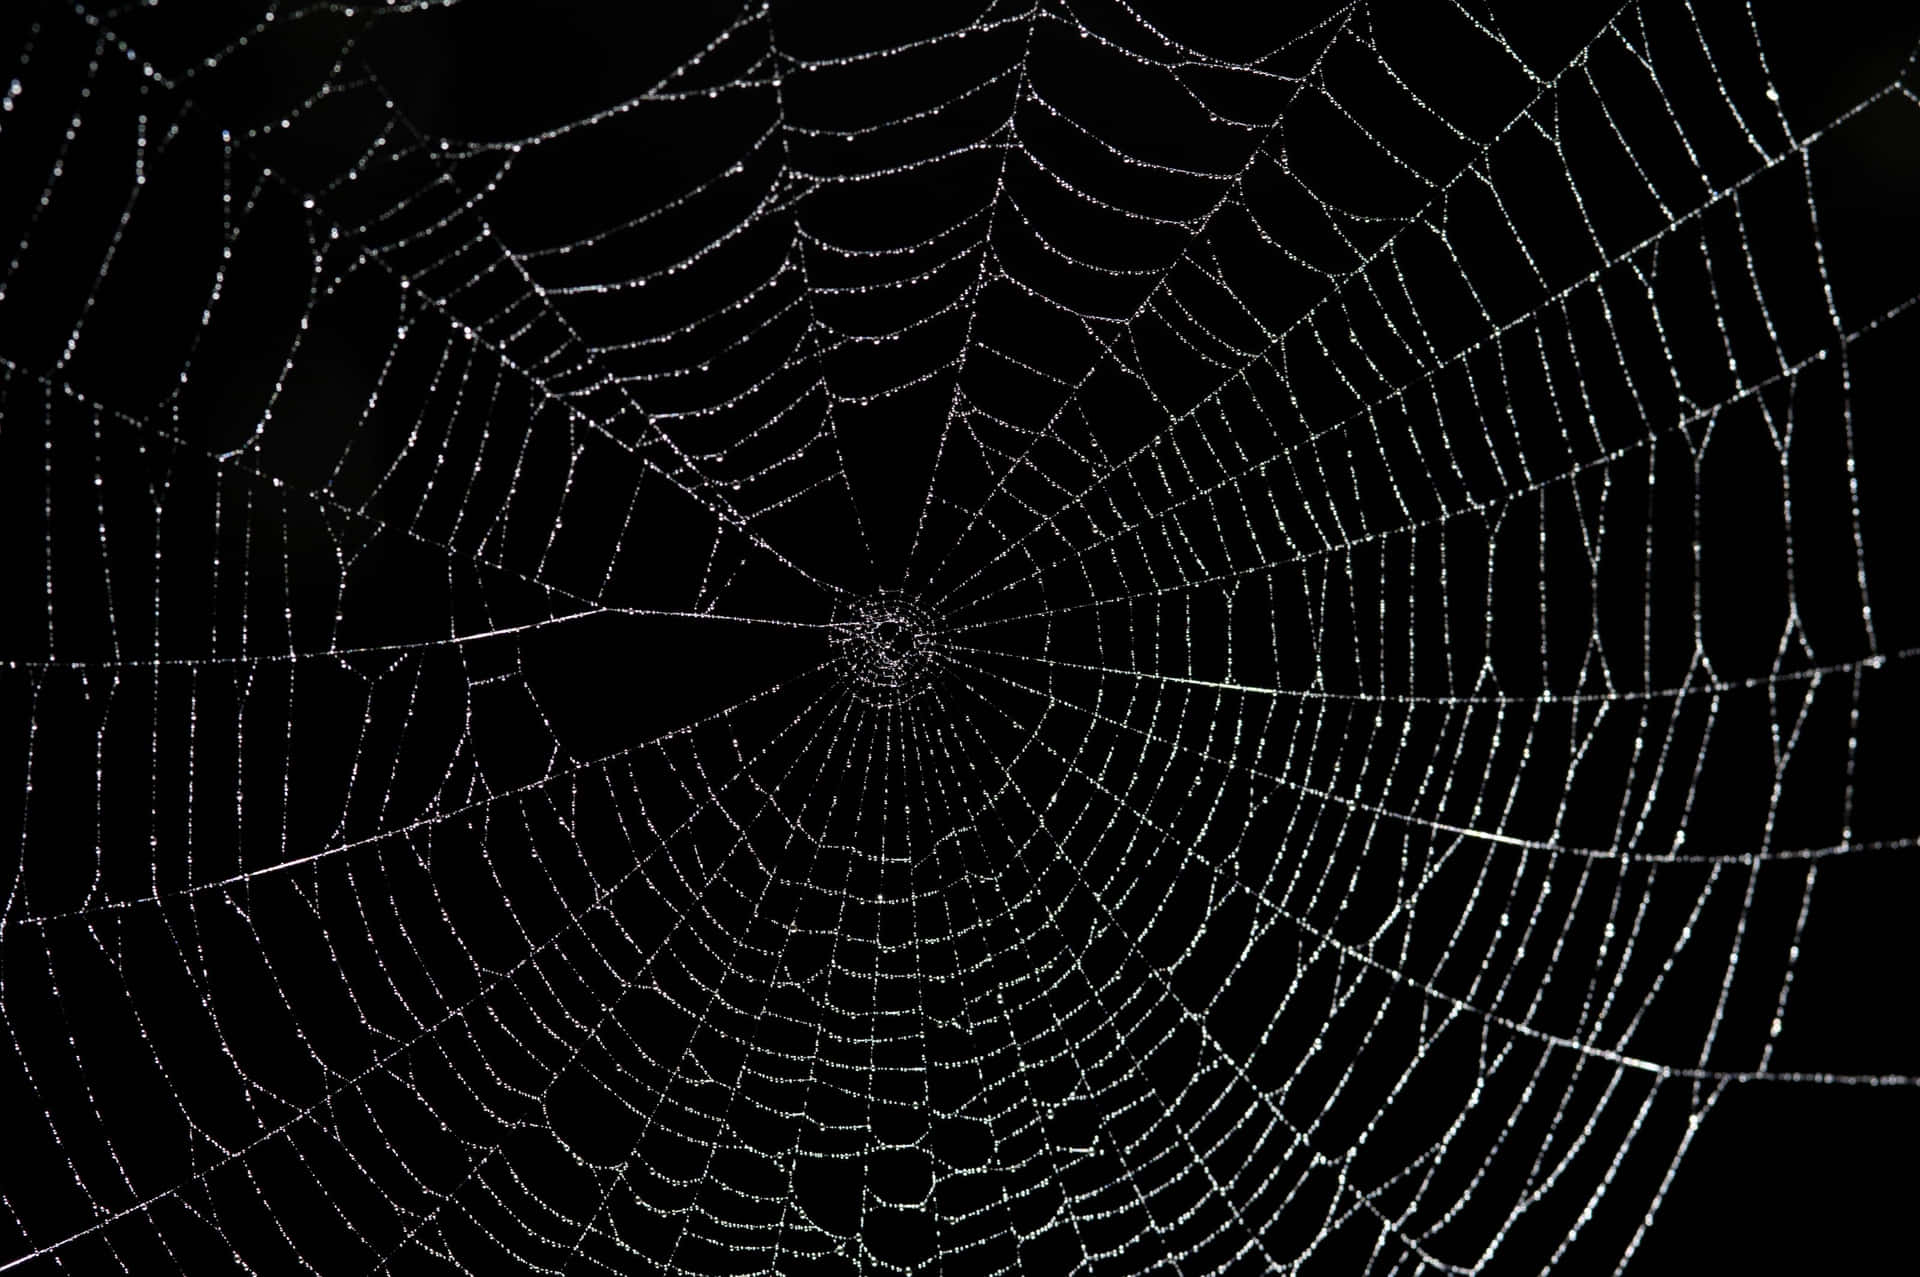 Caption: Spooky Black Spider Web Background